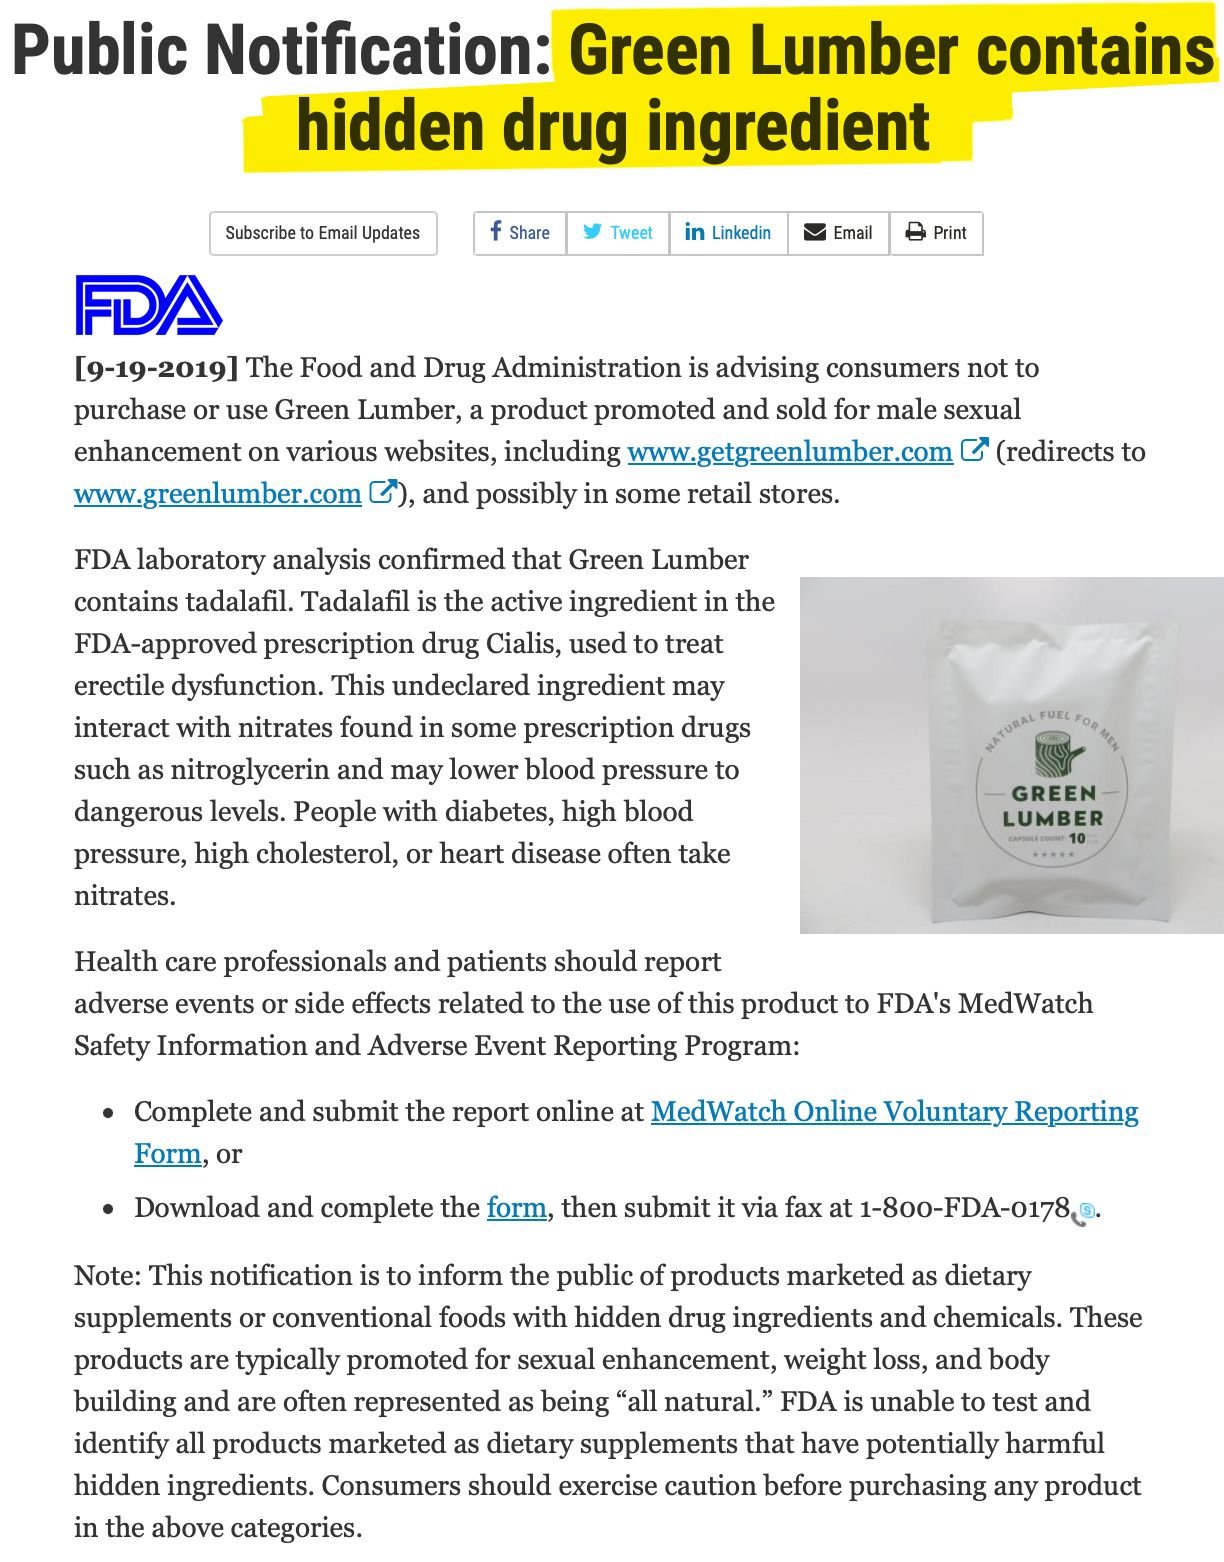 FDA document - Green Lumber contains hidden drug ingredient